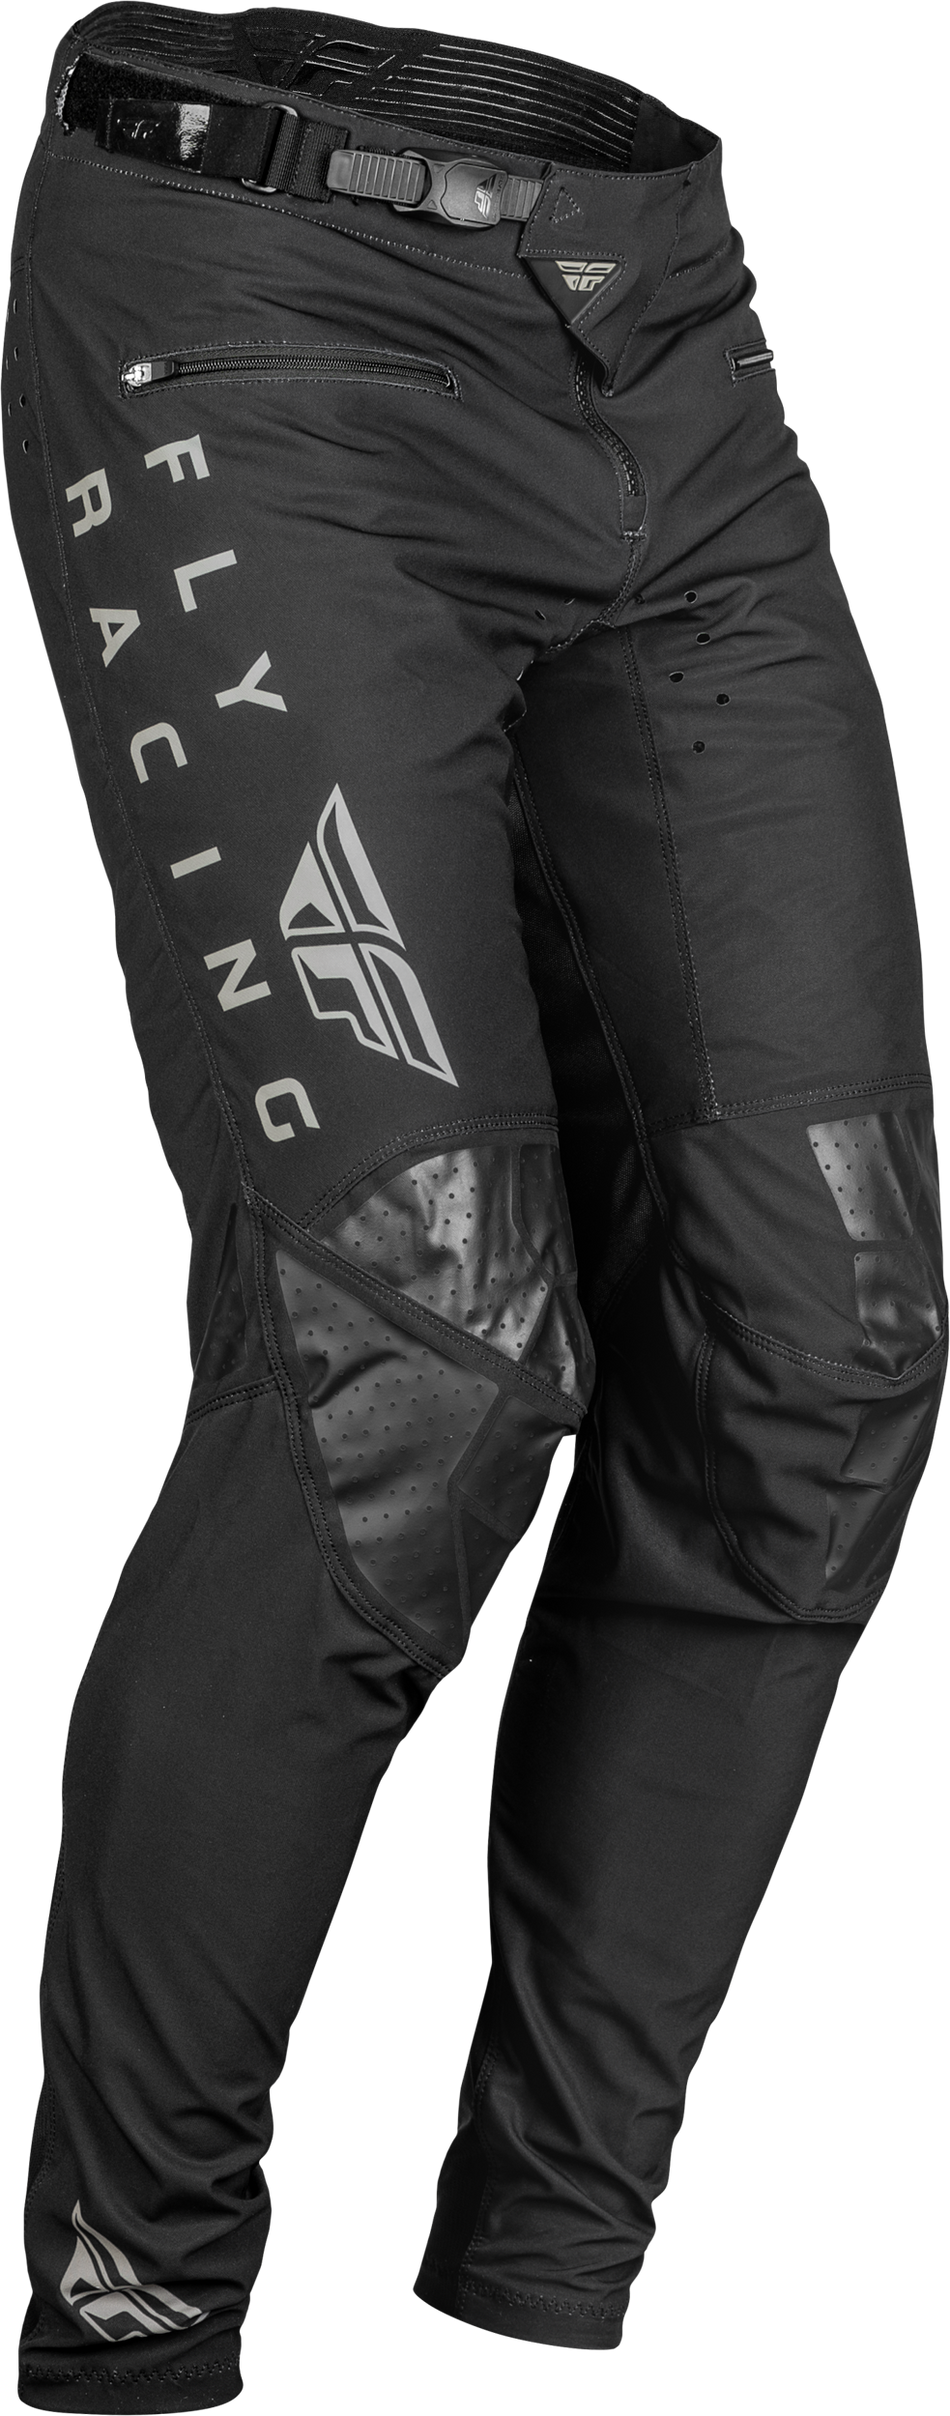 FLY RACING Radium Bicycle Pants Black/Grey Sz 30 376-04030